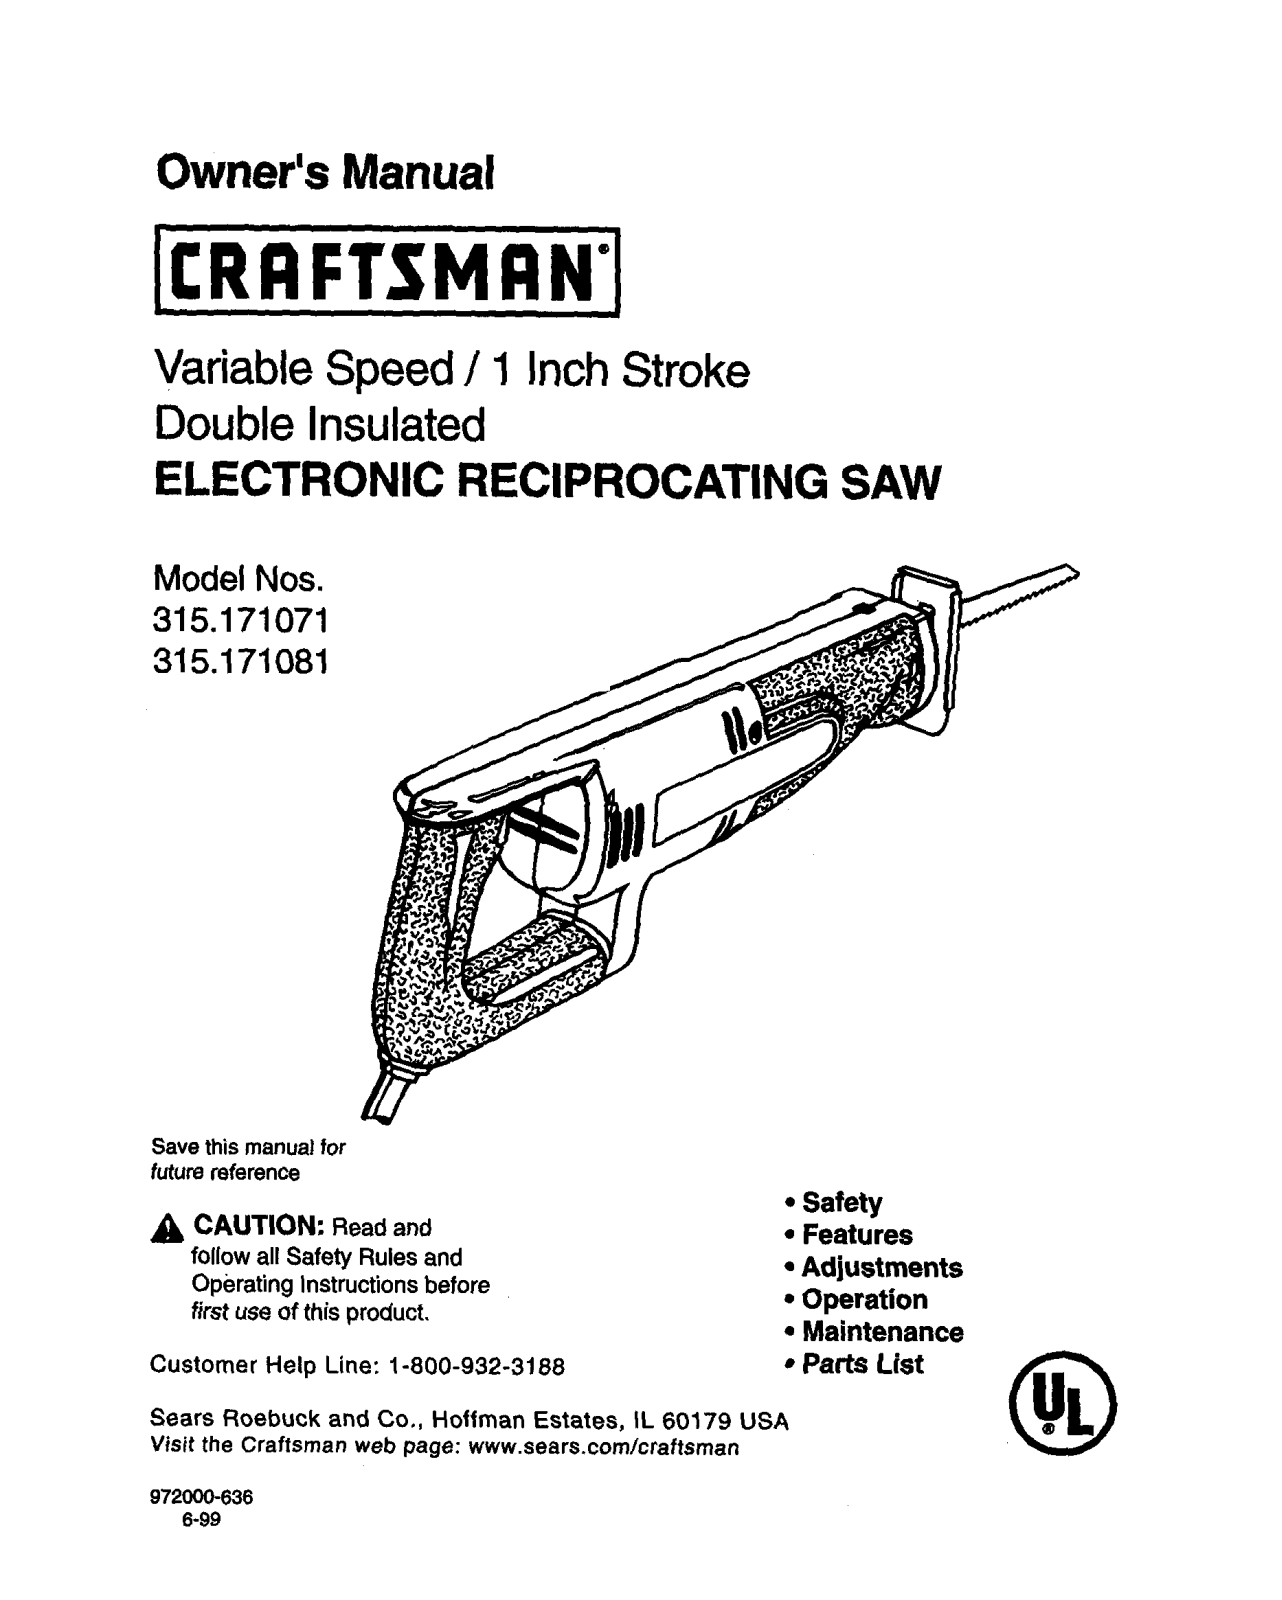 Craftsman 315171081 Owner’s Manual